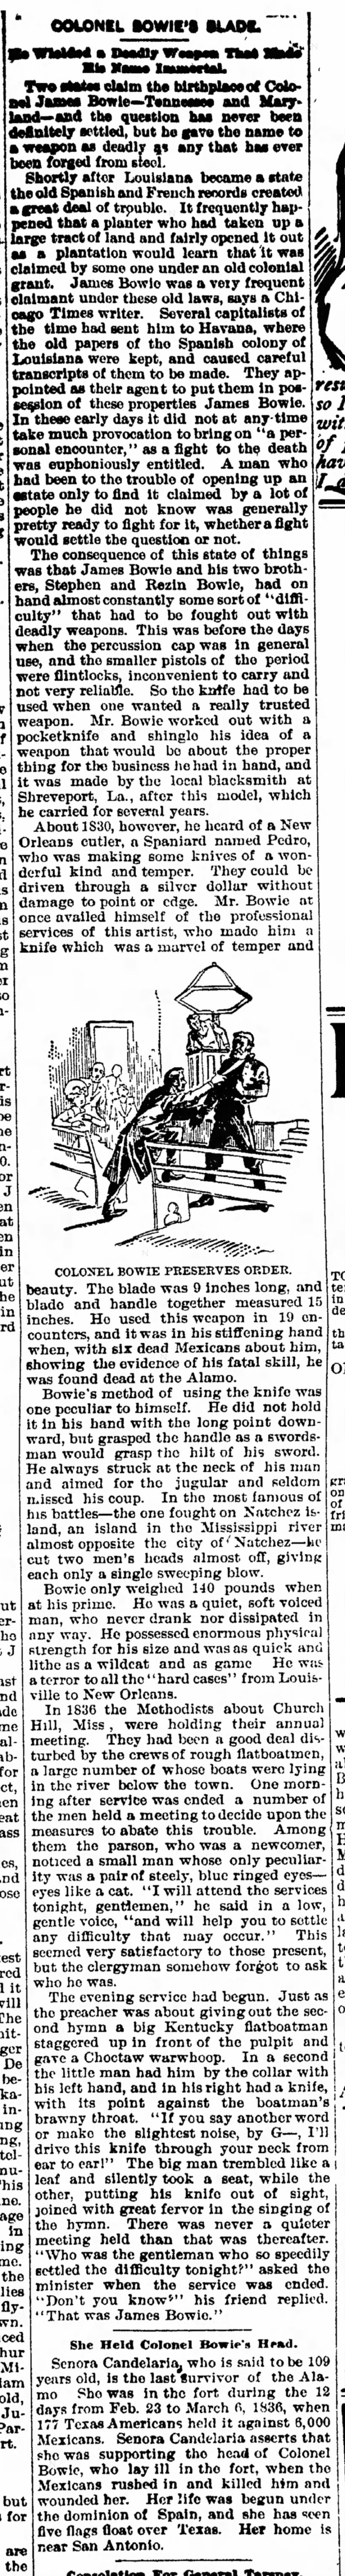 The Sandusky Register (Sandusky, OH) October 26, 1894 p. 7 Col. Bowie's blade, Candelaria